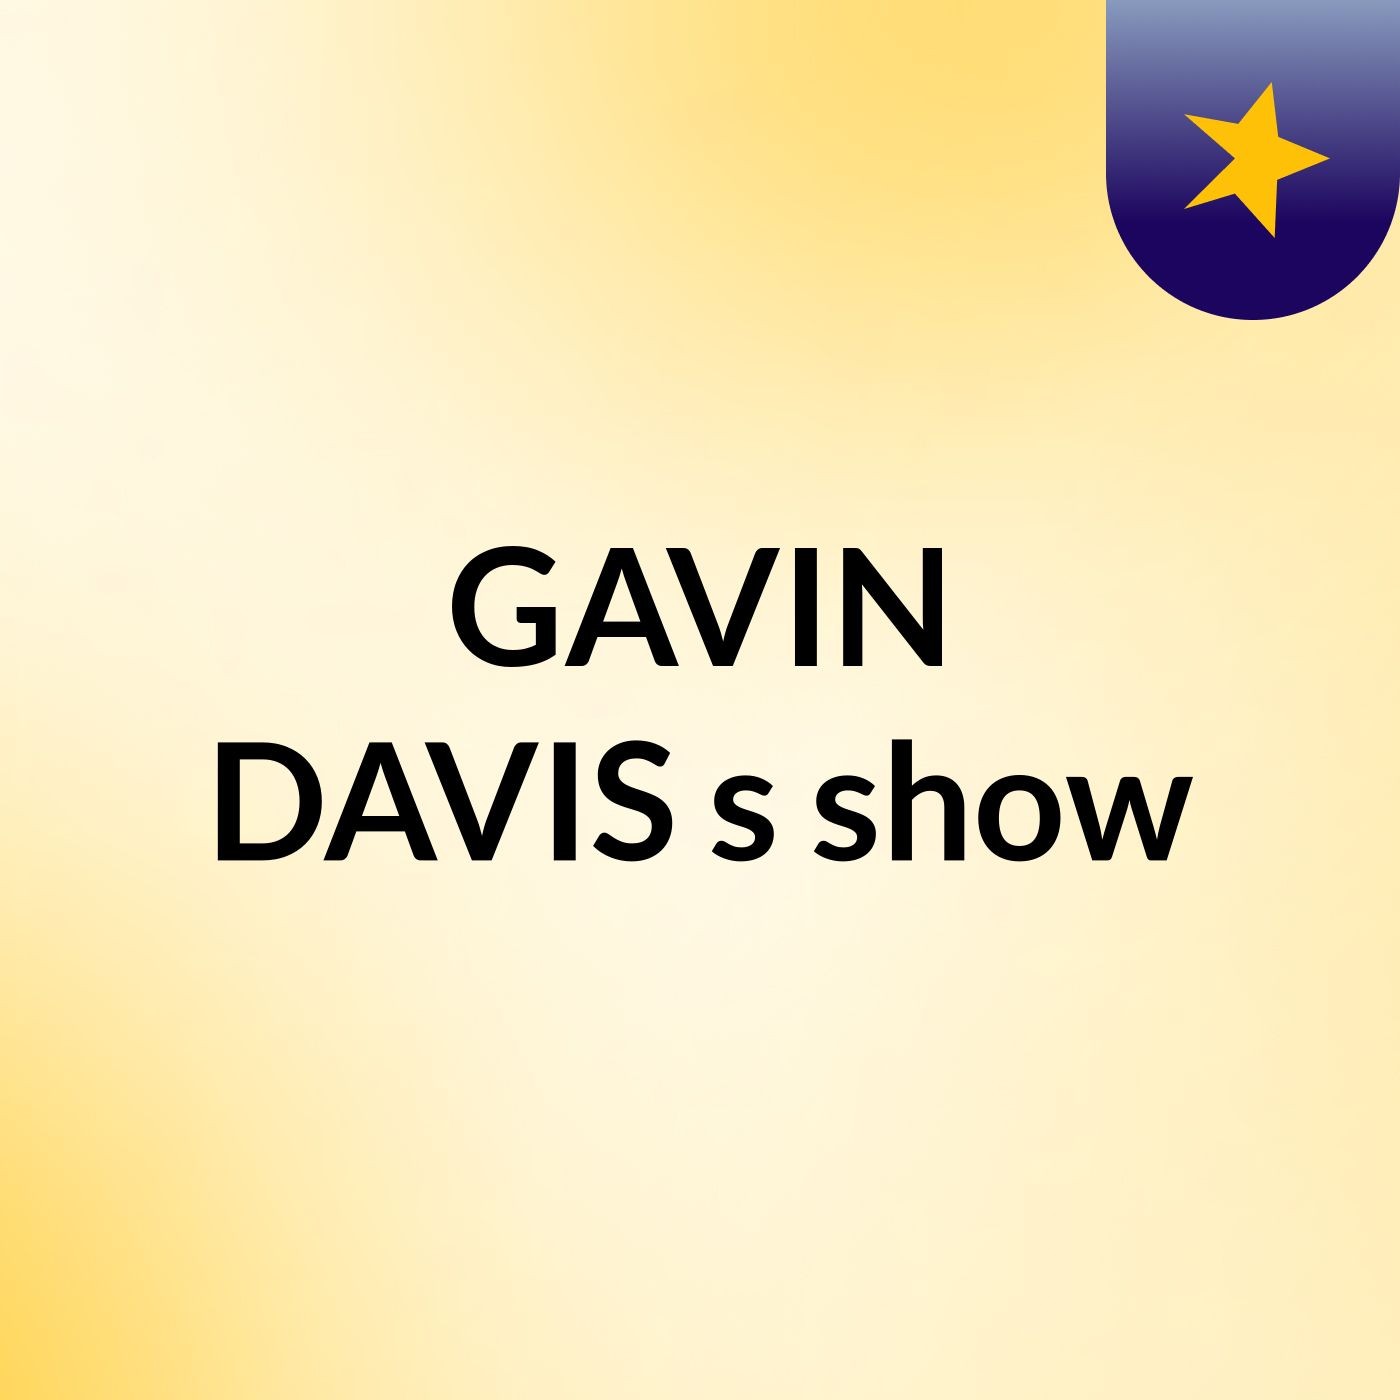 Episode 3 - GAVIN DAVIS's show